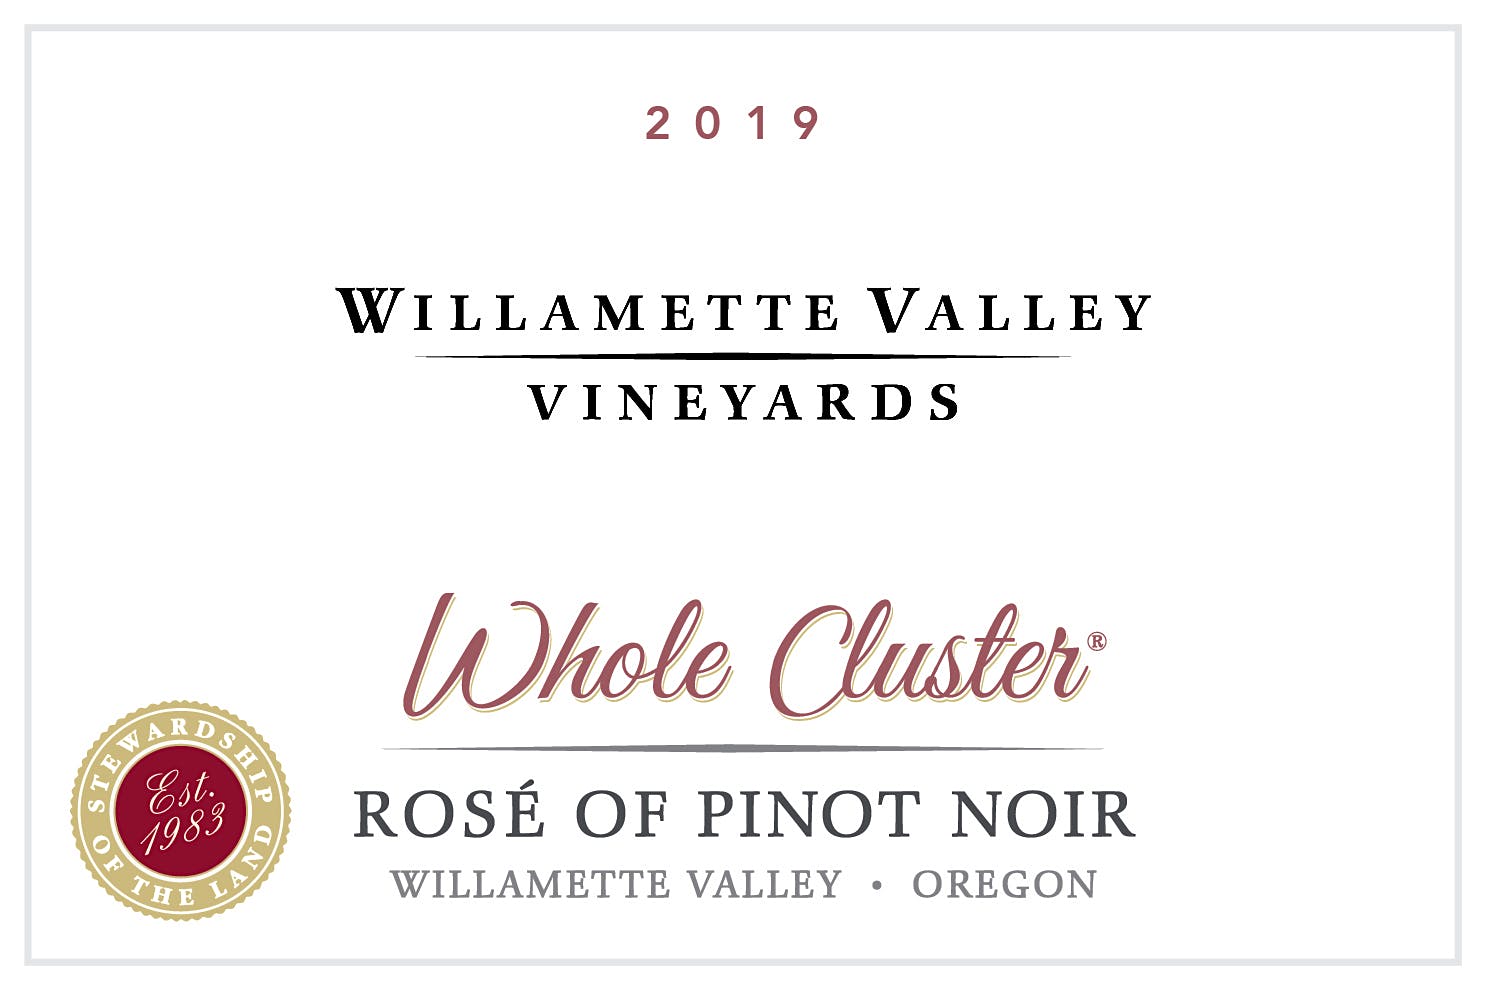 Label for Willamette Valley Vineyards